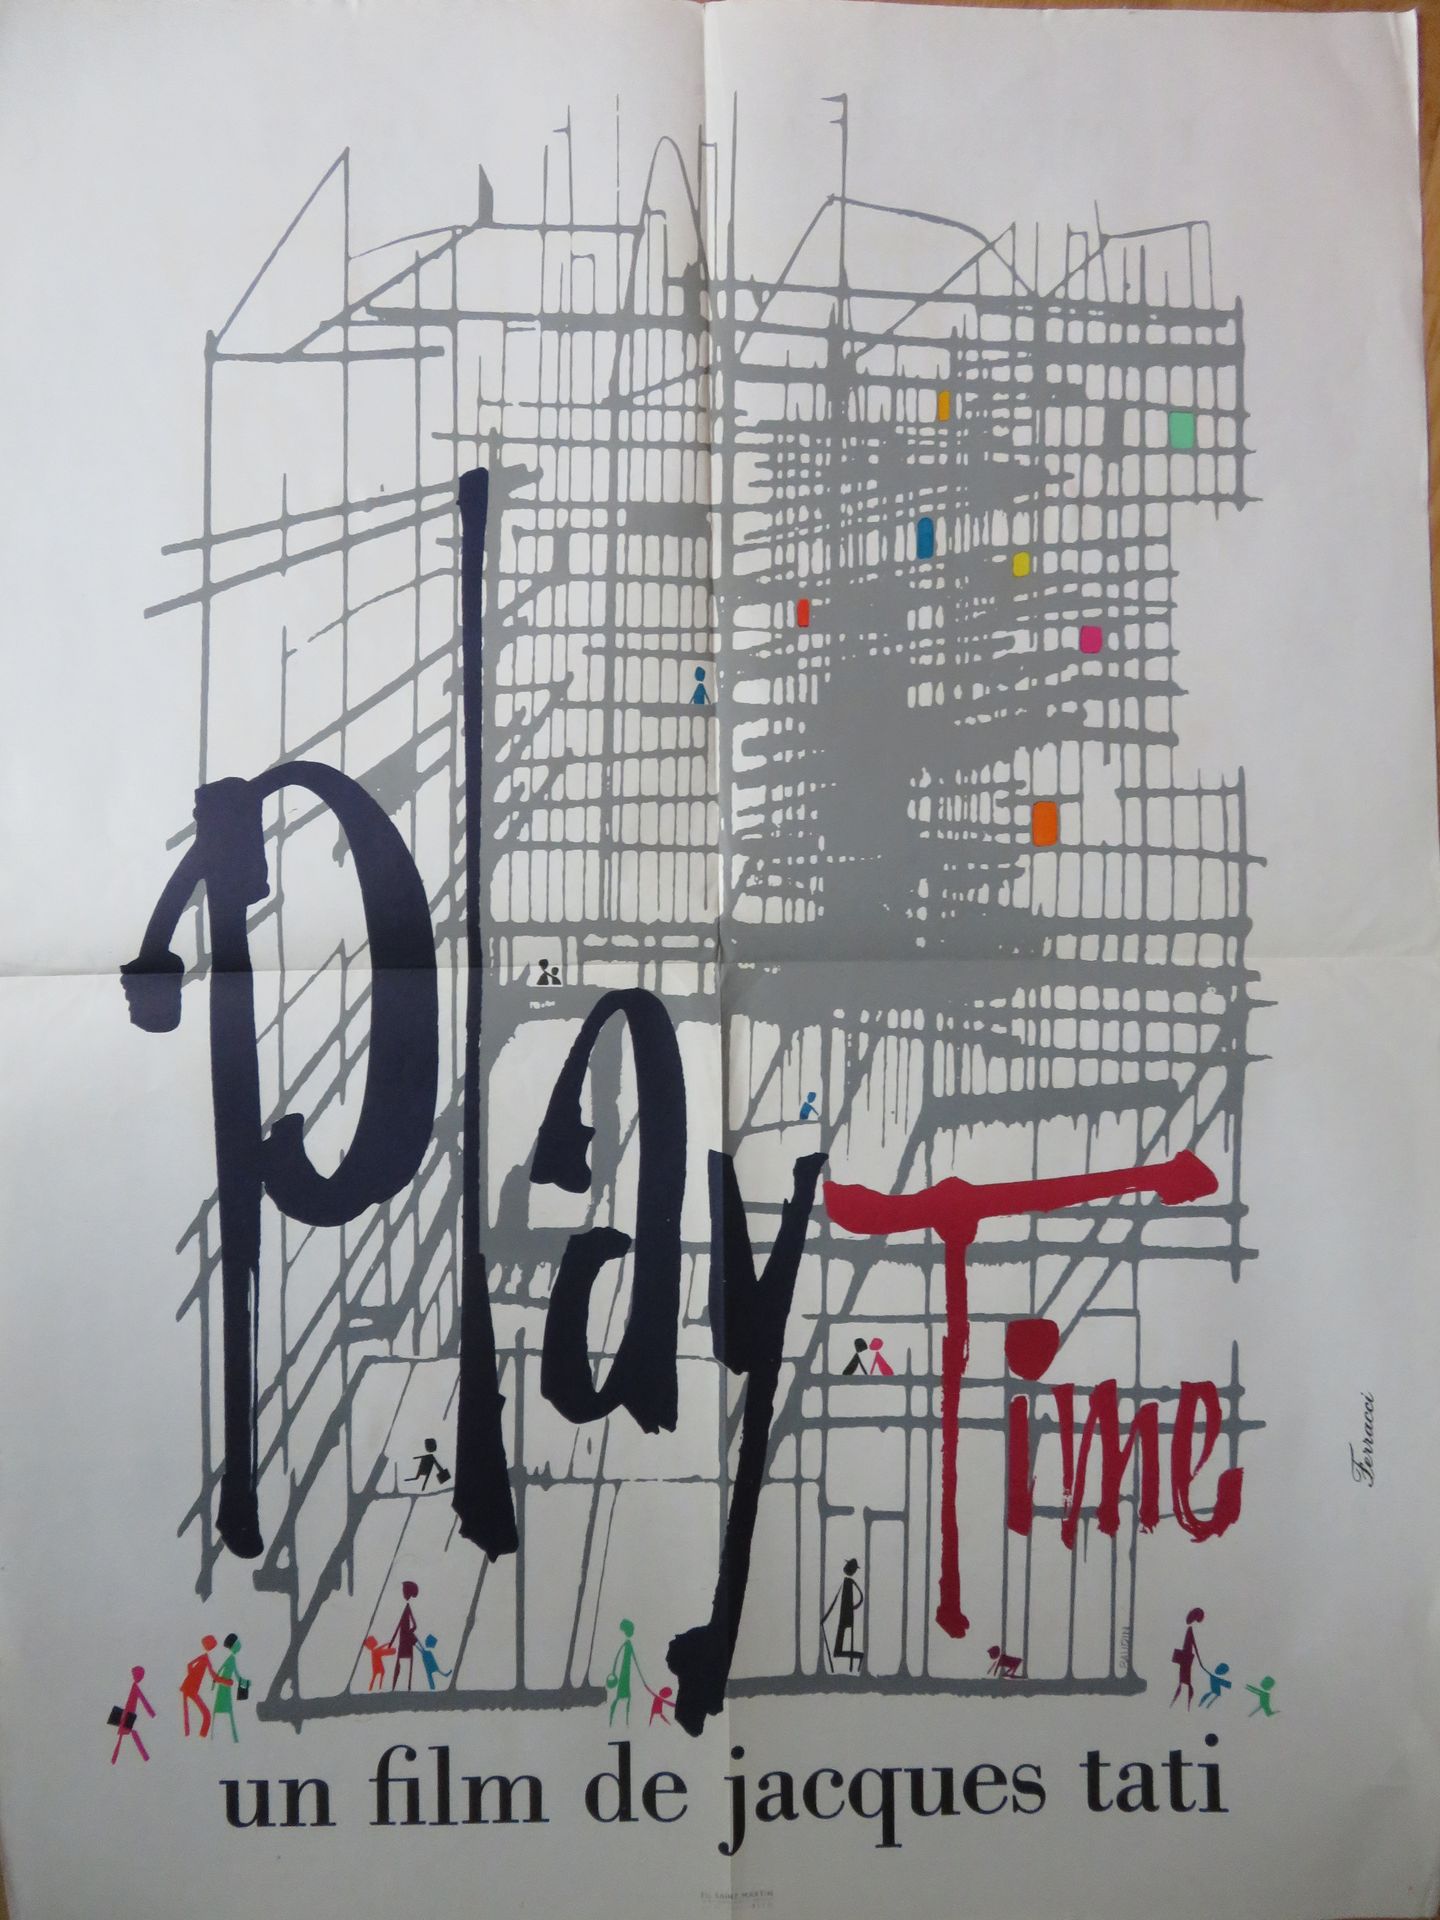 Null "¨PLAYTIME" (1967) por y con Jacques TATI - Dibujo de BAUDIN - Ilustrado po&hellip;